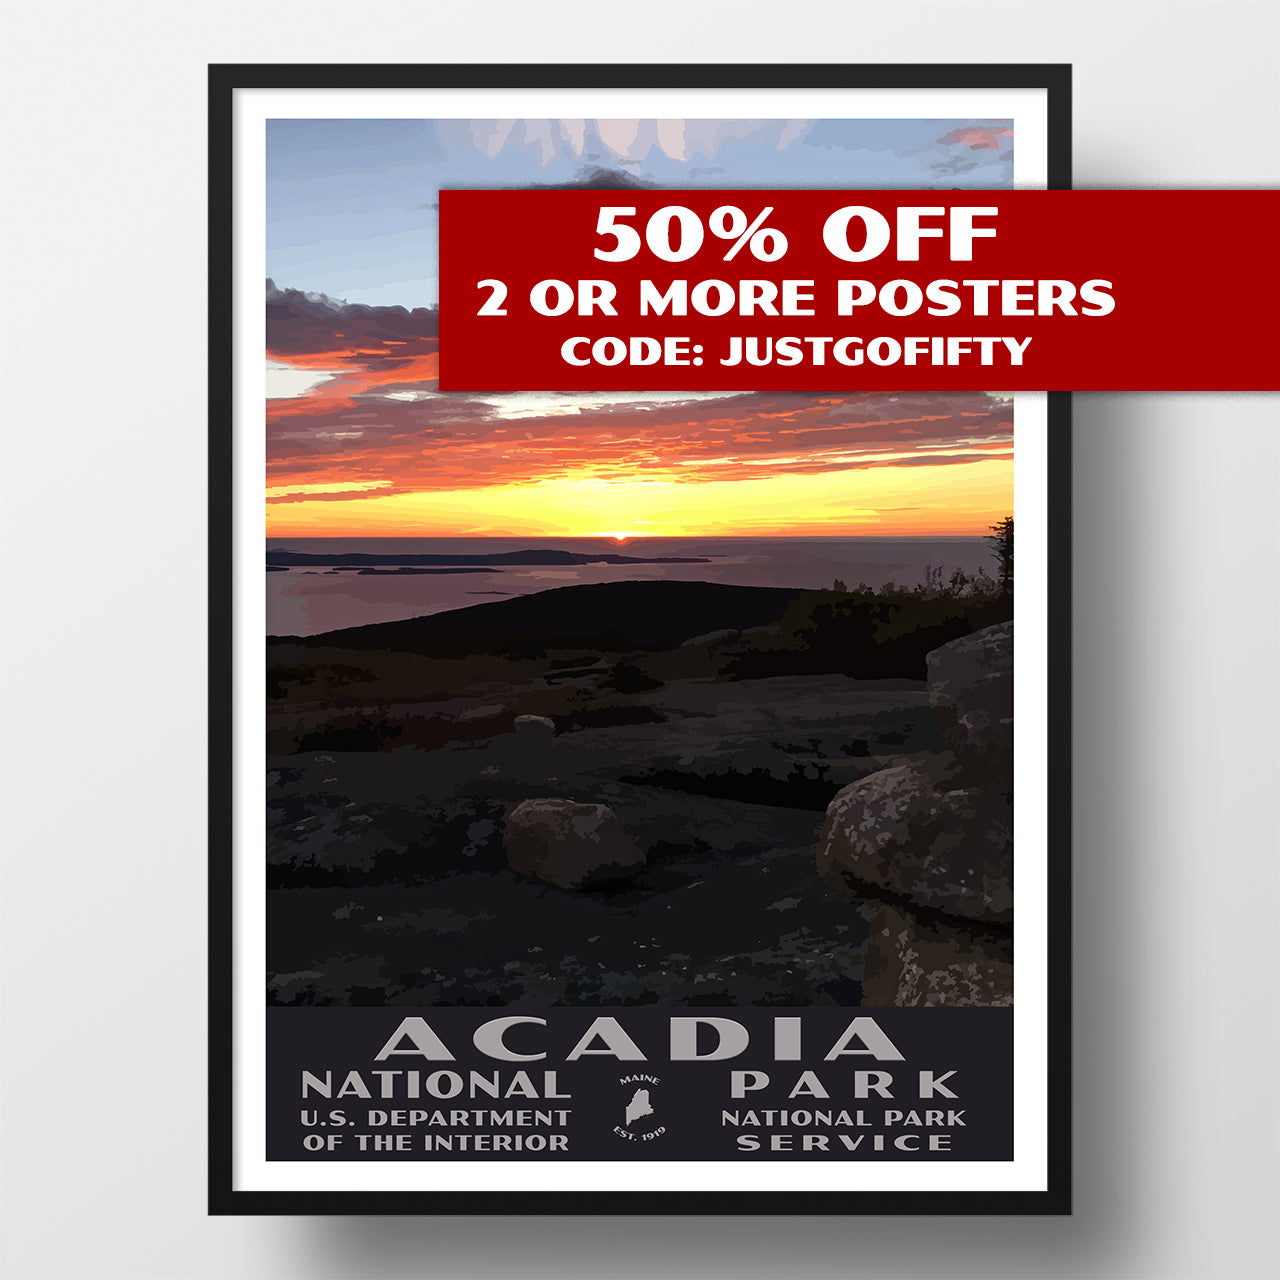 Acadia National Park Poster-WPA (Cadillac Mountain Sunrise)